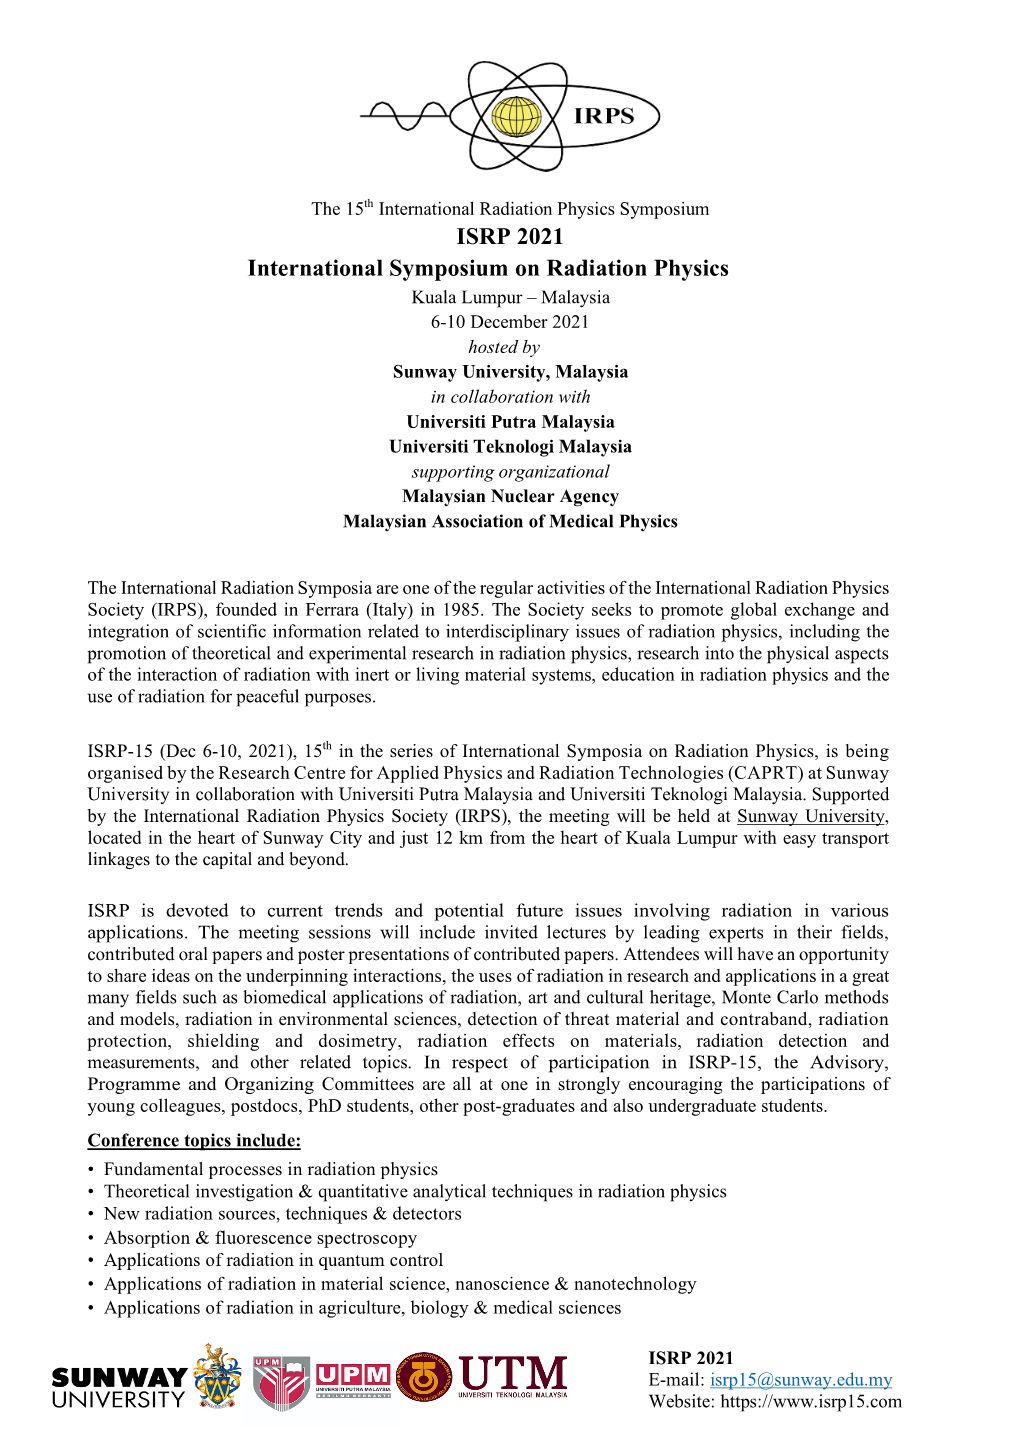 ISRP 2021 International Symposium on Radiation Physics